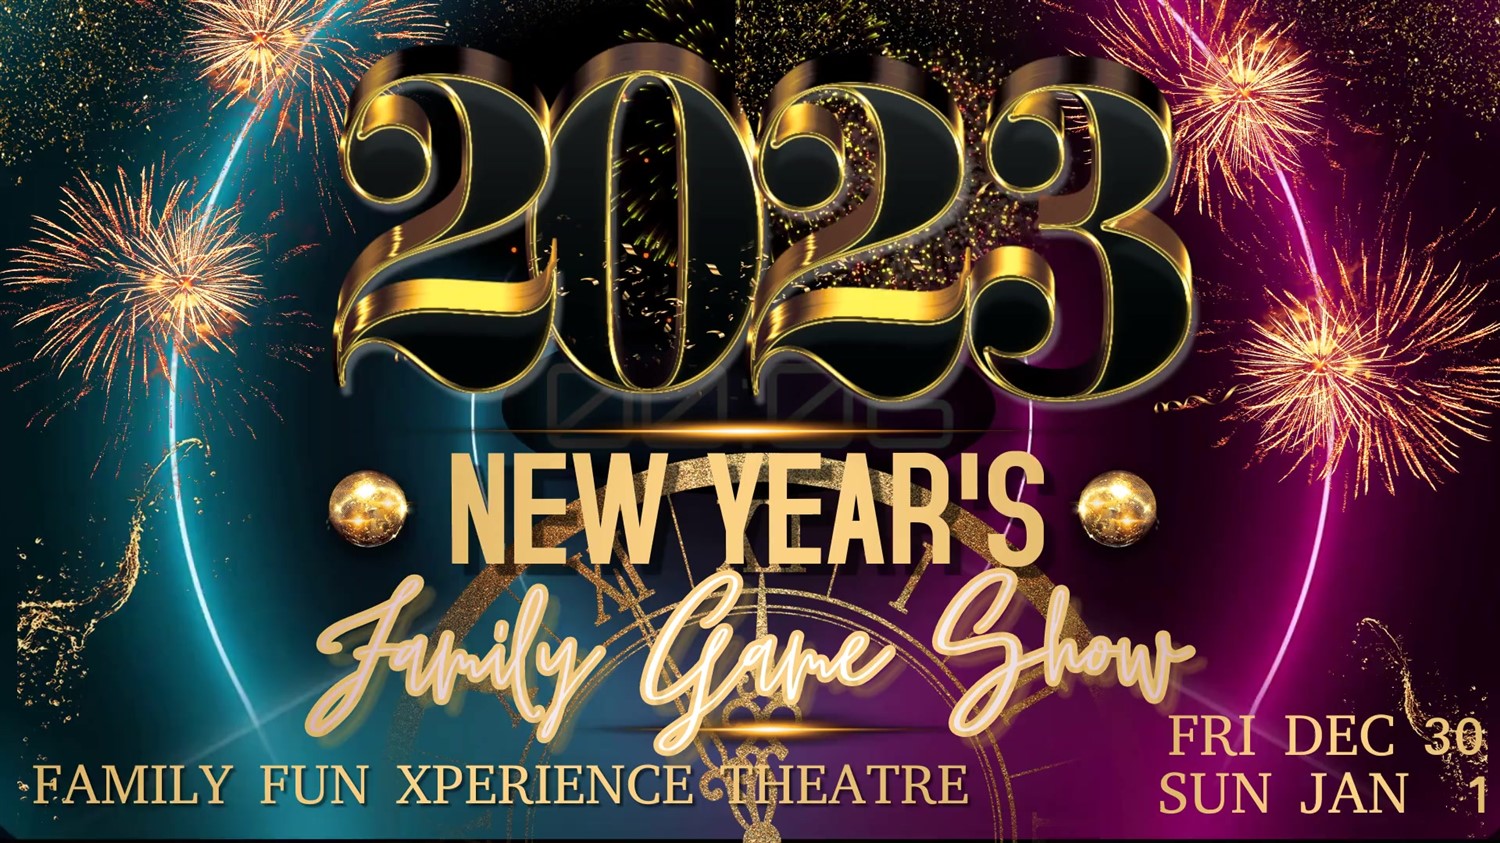 NEW YEARS DAY FAMILY GAME SHOW  on ene. 01, 19:00@FFX Theatre - Elegir asientoCompra entradas y obtén información enFamily Fun Xperience tickets.ffxshow.org